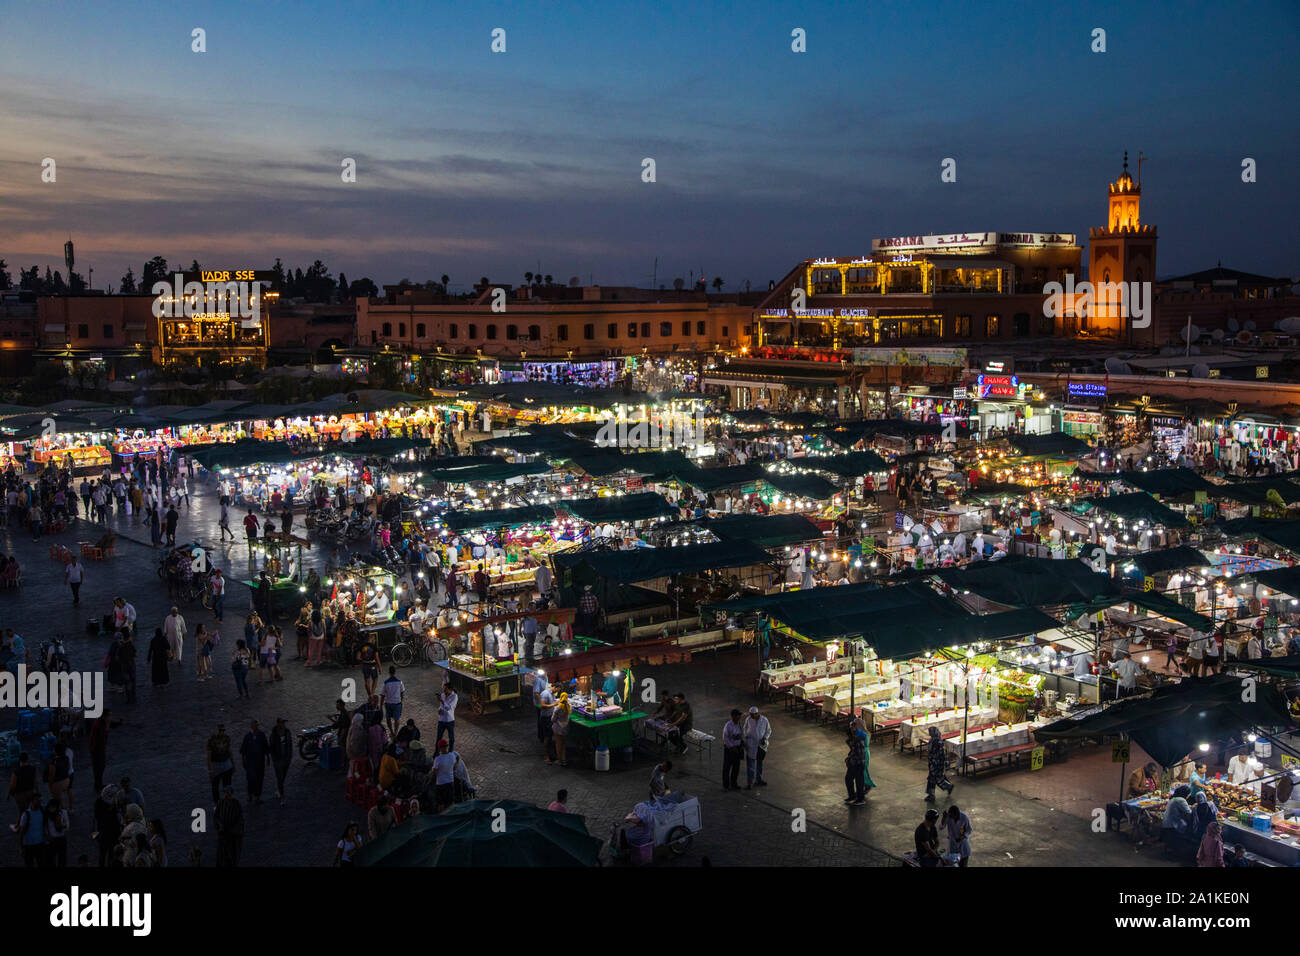 Chioschi in piazza Jemaa el Fna al crepuscolo, Marrakech, Marocco, Africa del Nord Foto Stock